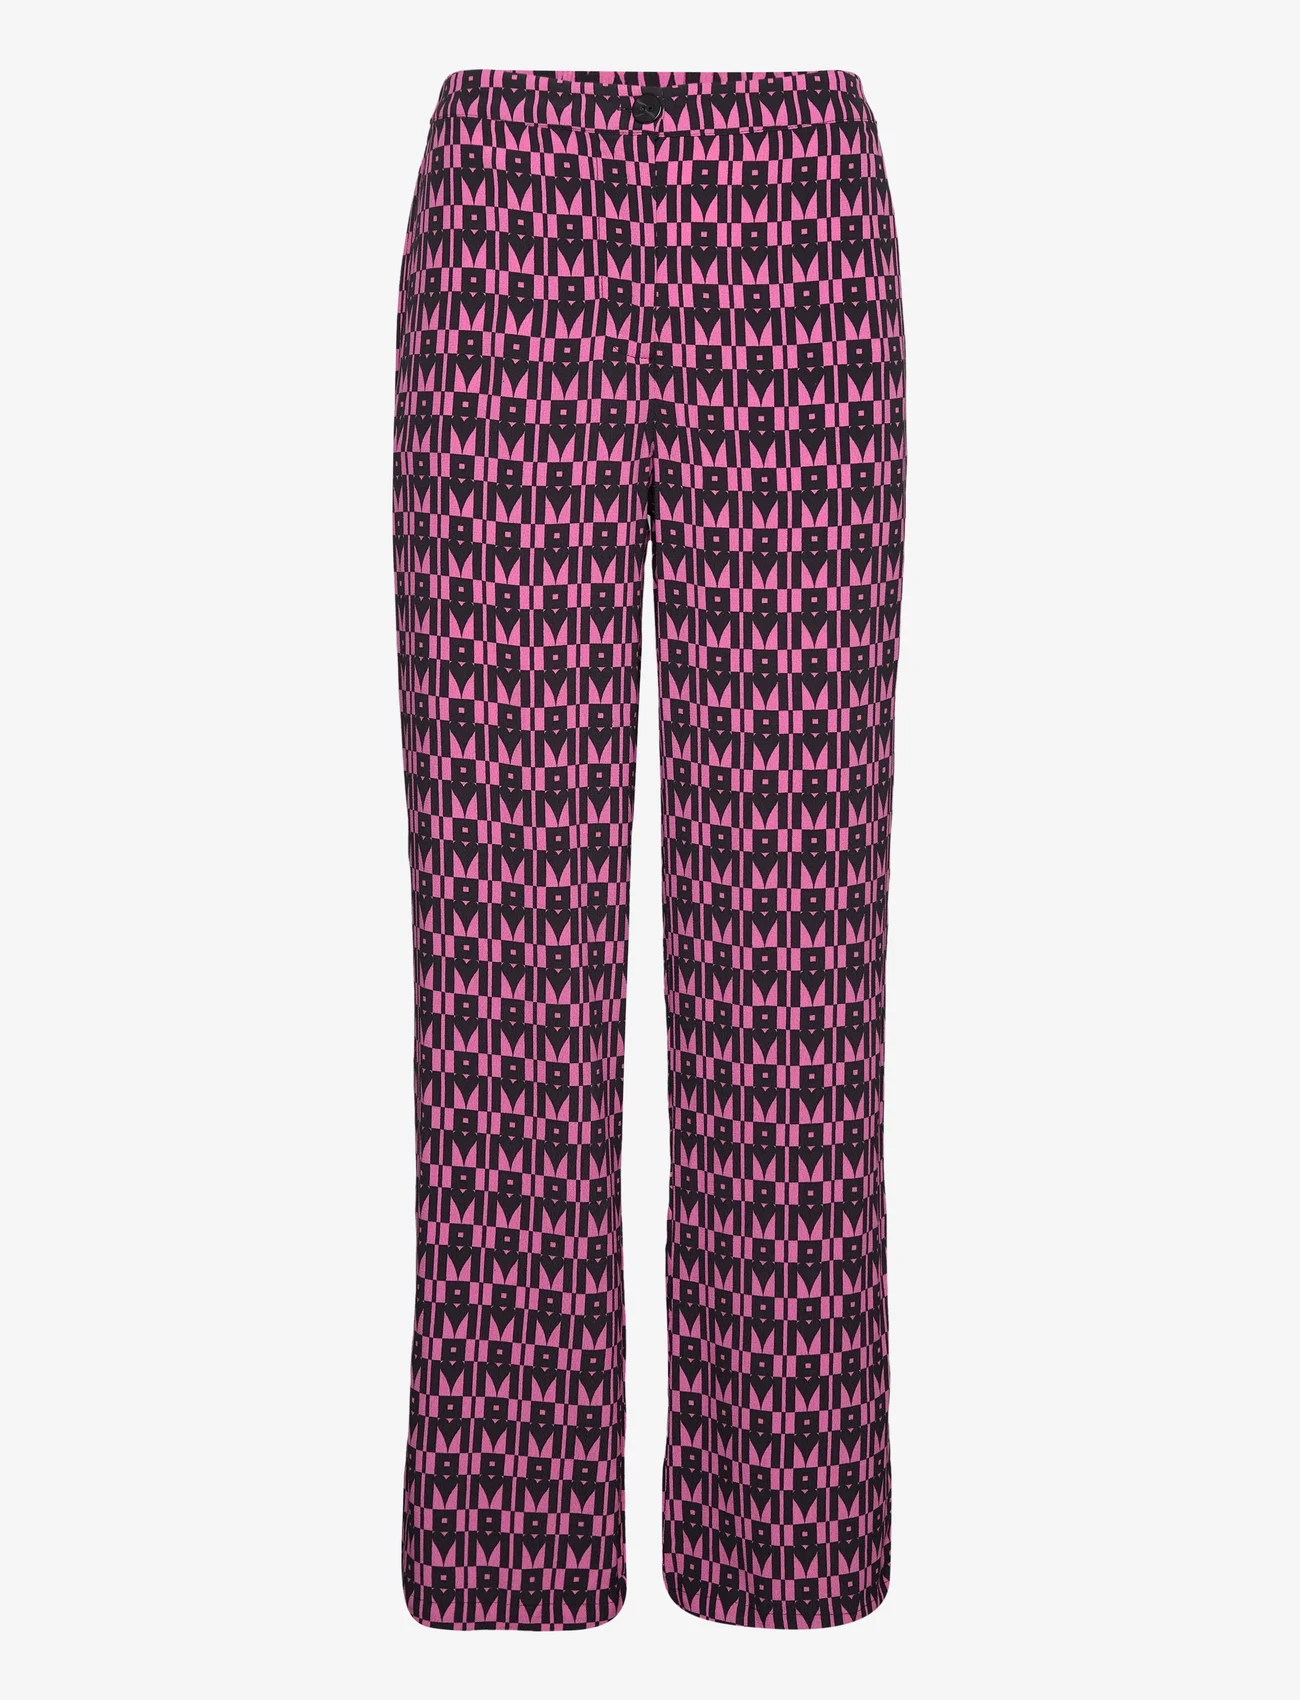 Modström - BorysMD print pants - rette bukser - graphic heart cosmos pink - 0